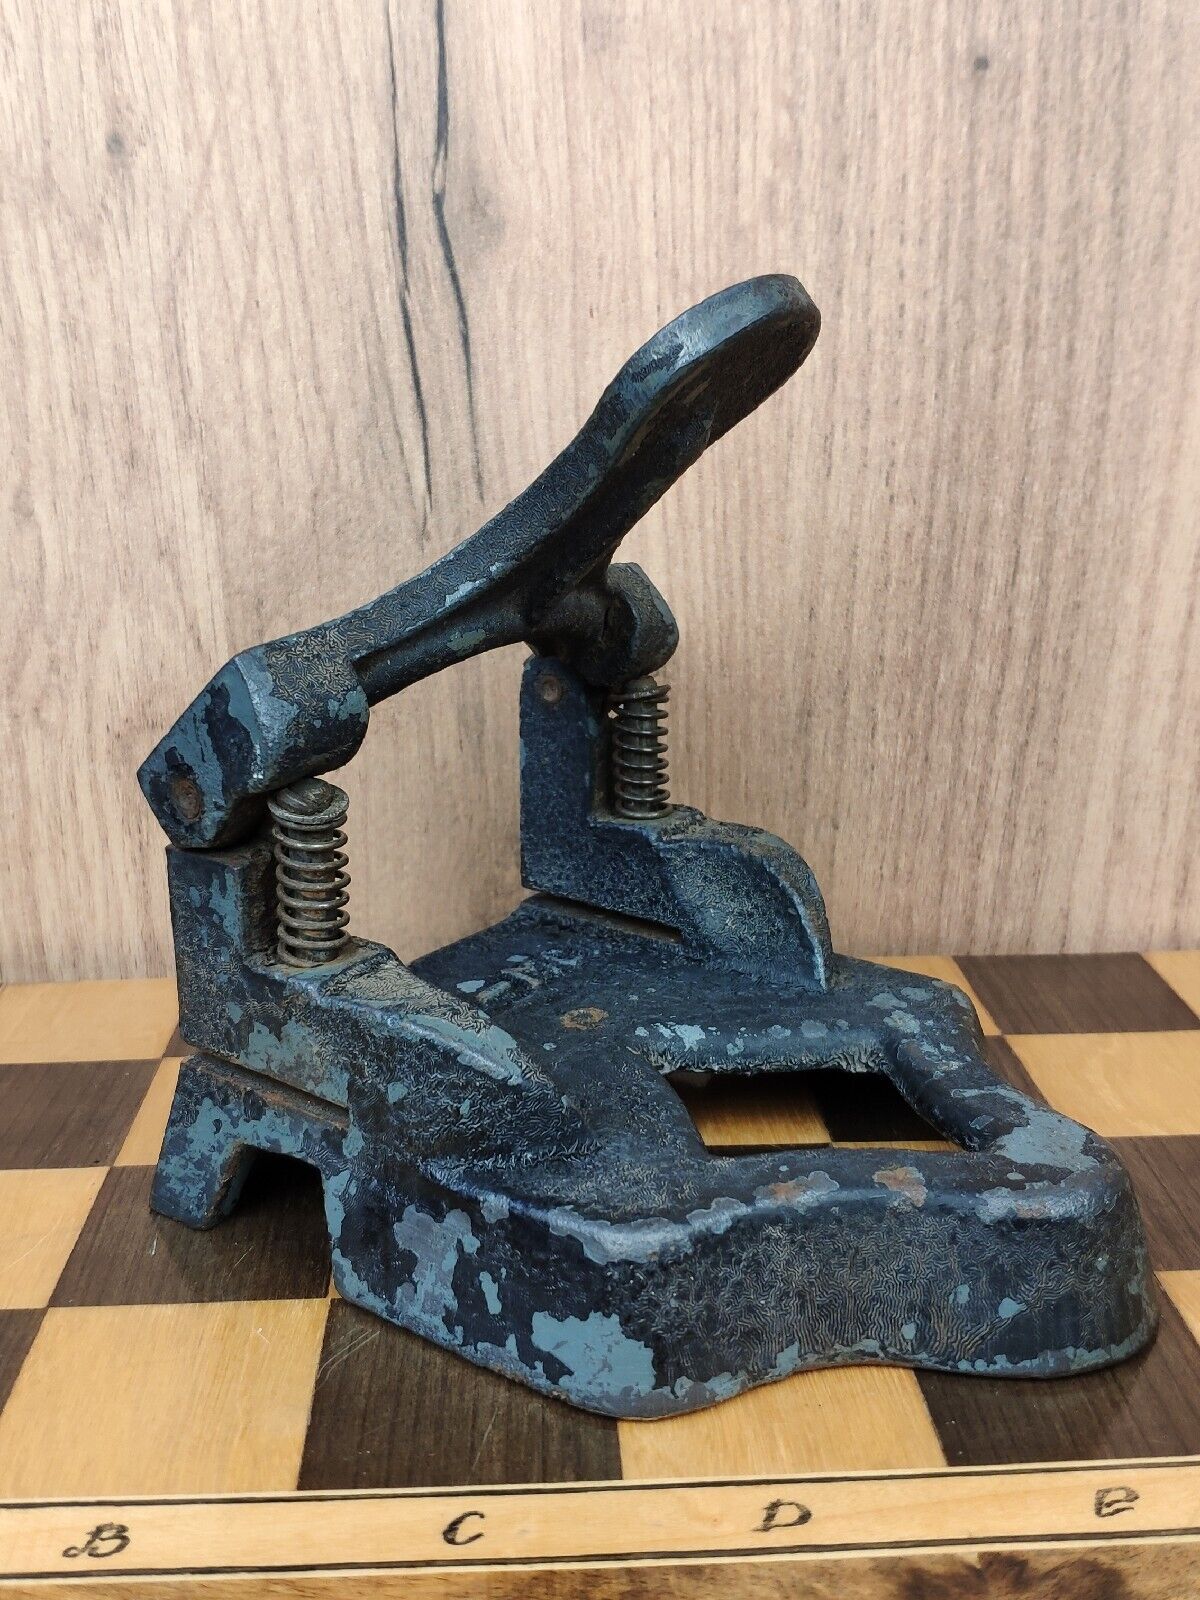 Vintage sharp cast iron hole punch USSR 1930s. Tool